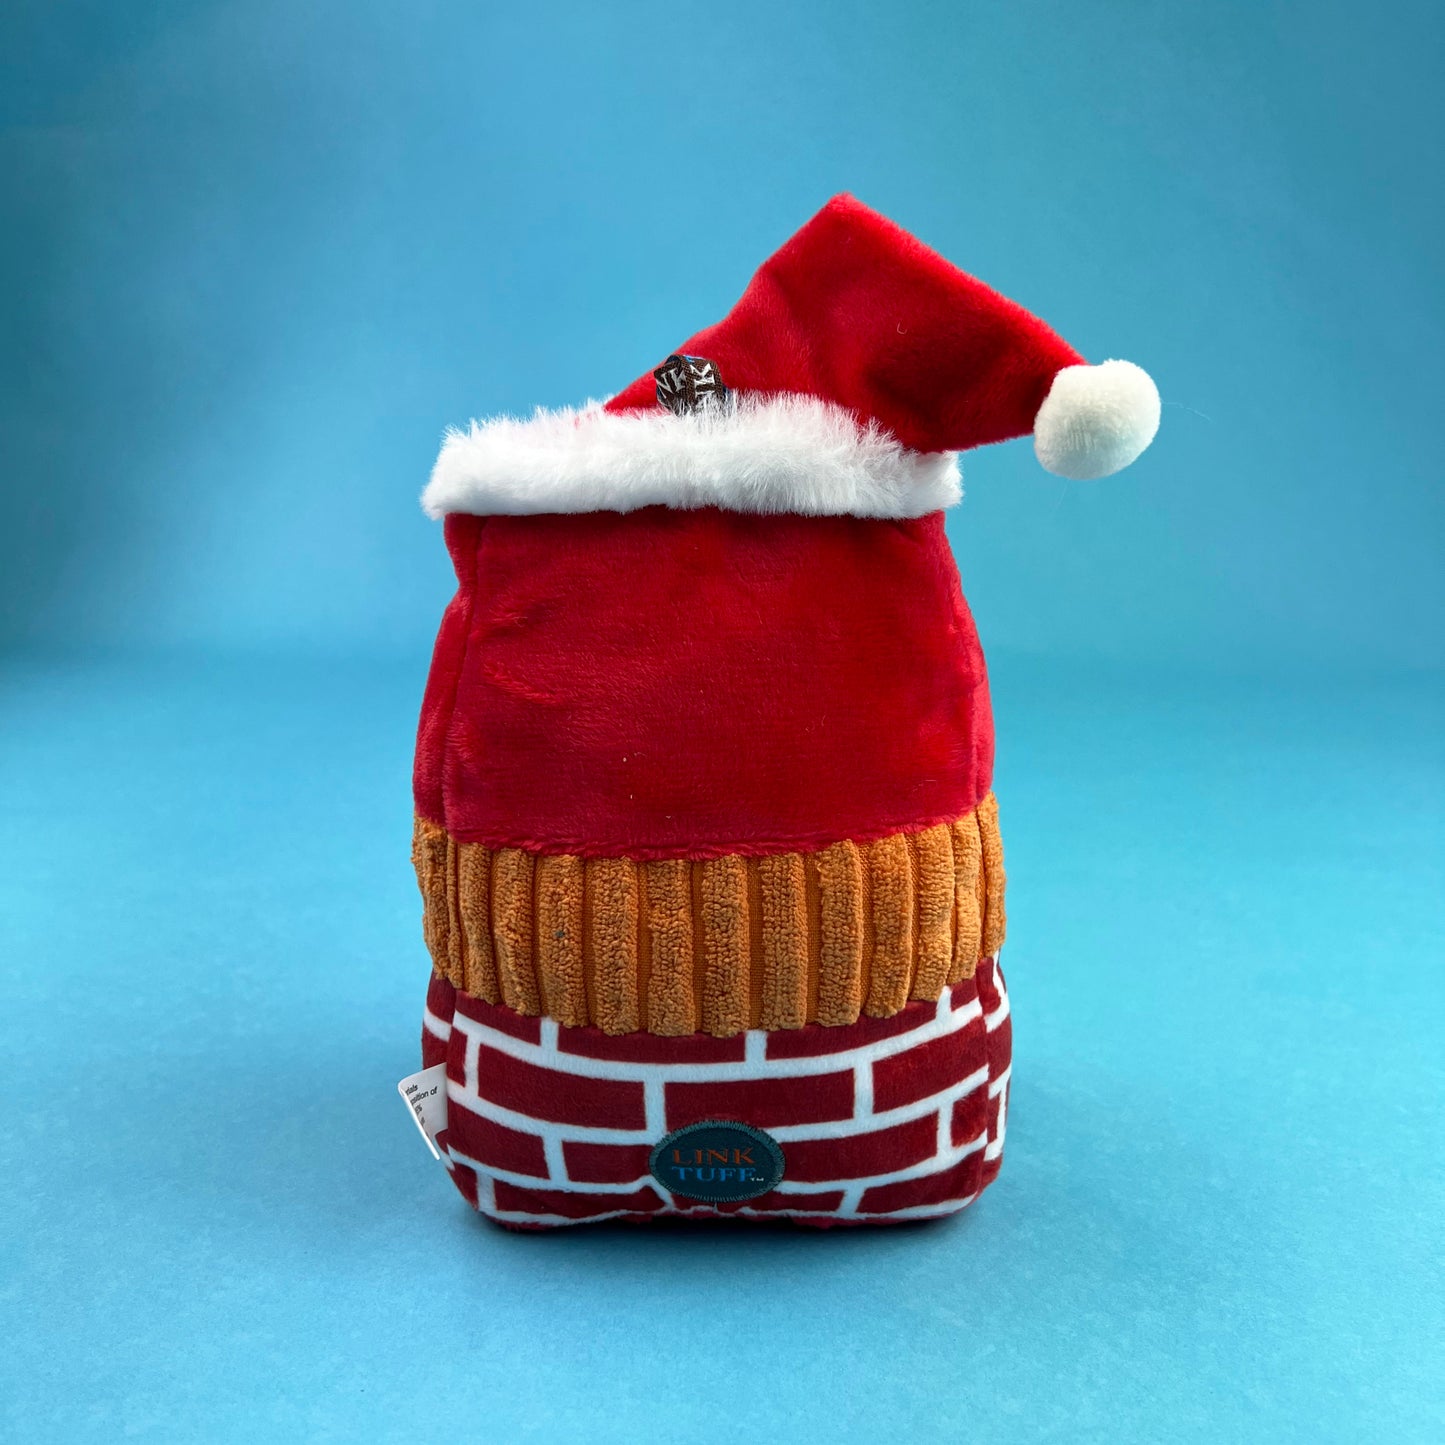 Santa's Coming Down the Chimney Toy bearsupreme